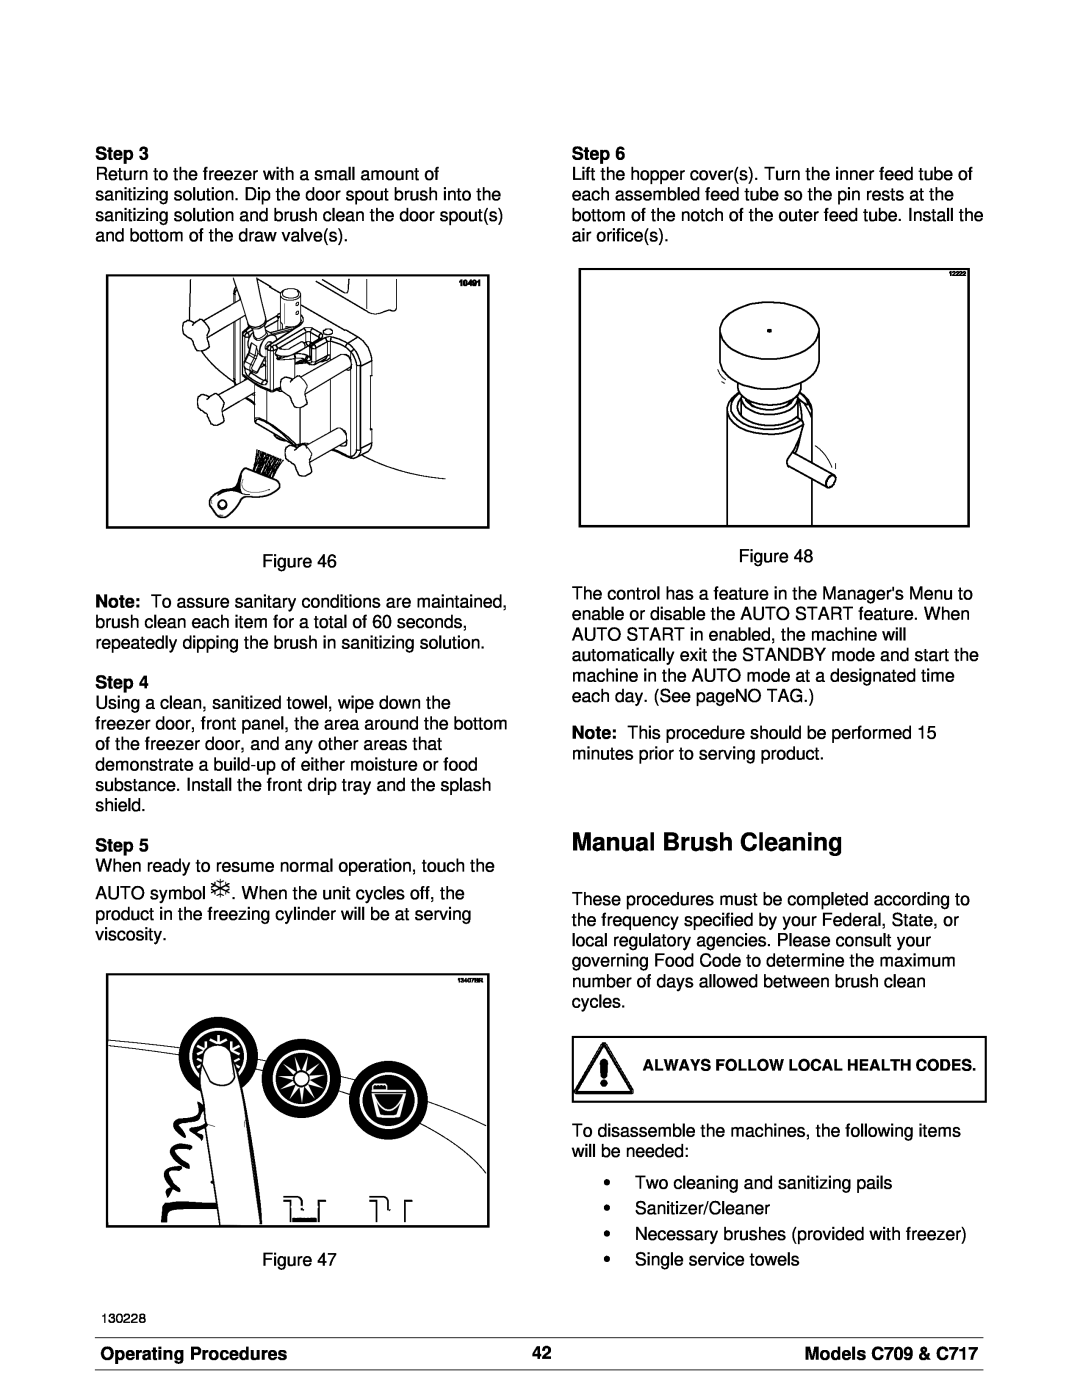 Taylor manual Manual Brush Cleaning, Step, Operating Procedures, Models C709 & C717 